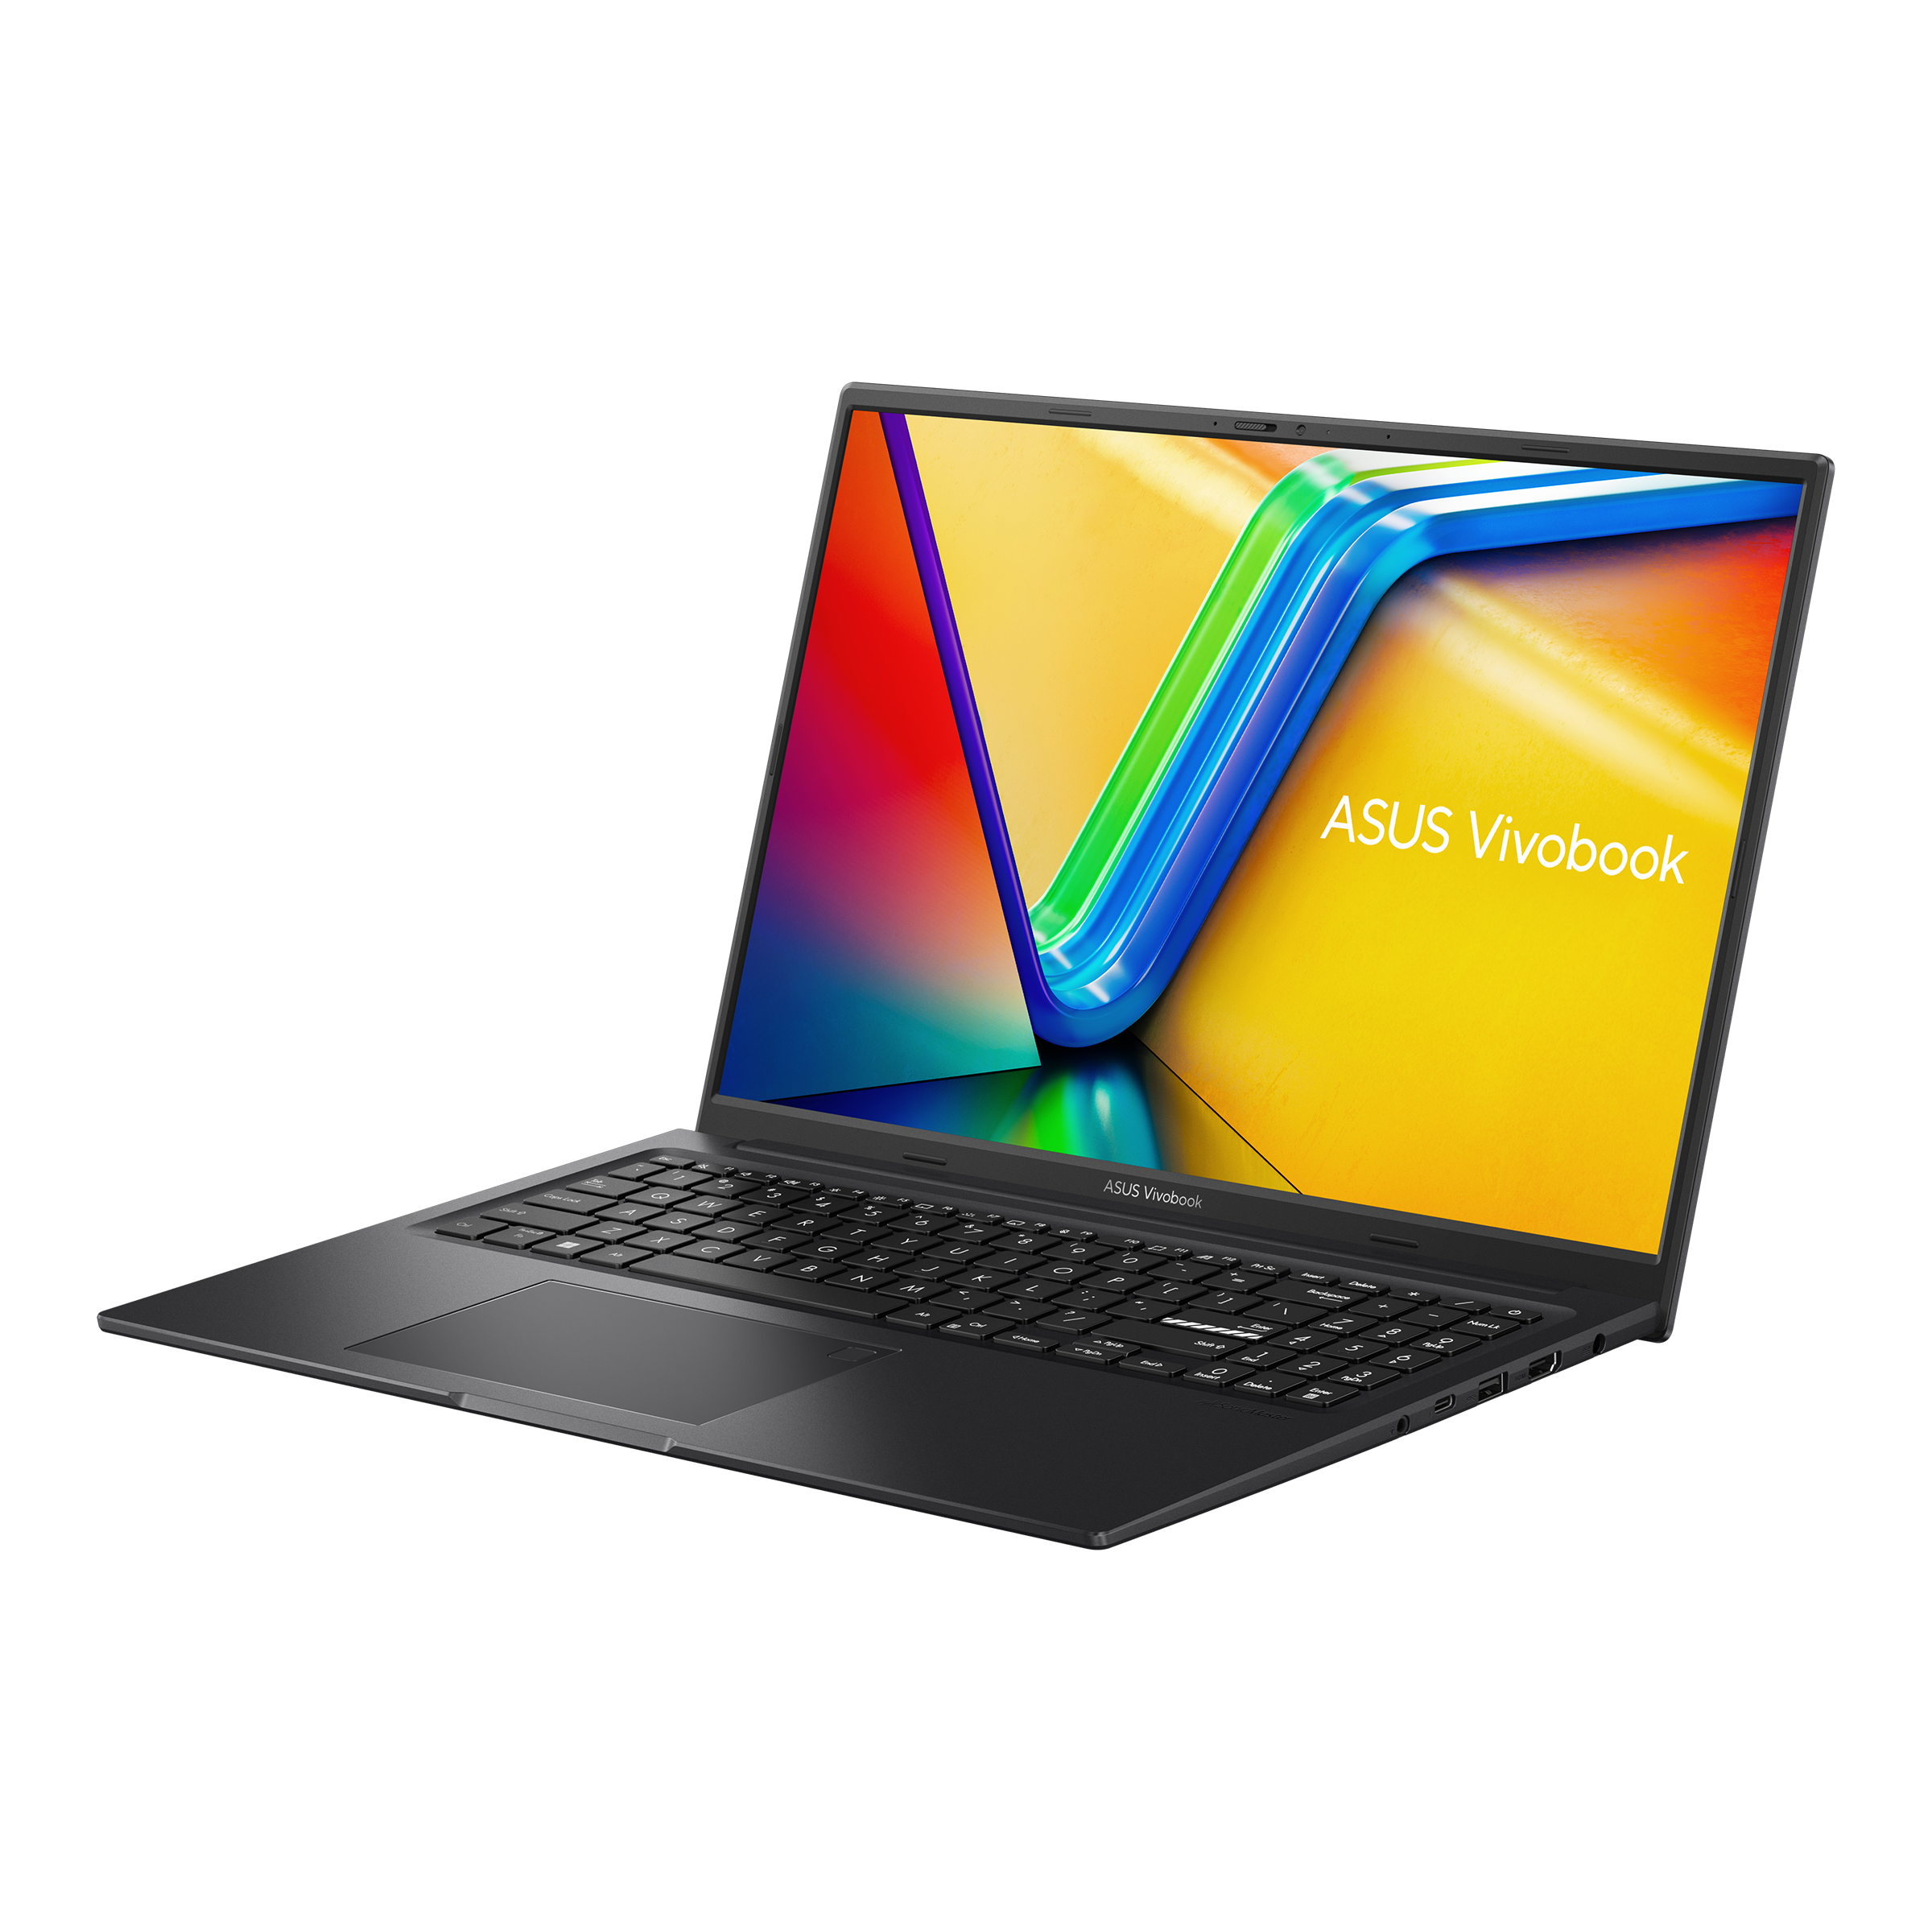 अब क्या चाहिए?, ले लीजिए 25 हजार रुपये तक की छूट में Asus Laptops-What do you want now?, get Asus Laptops at a discount of up to Rs 25,000